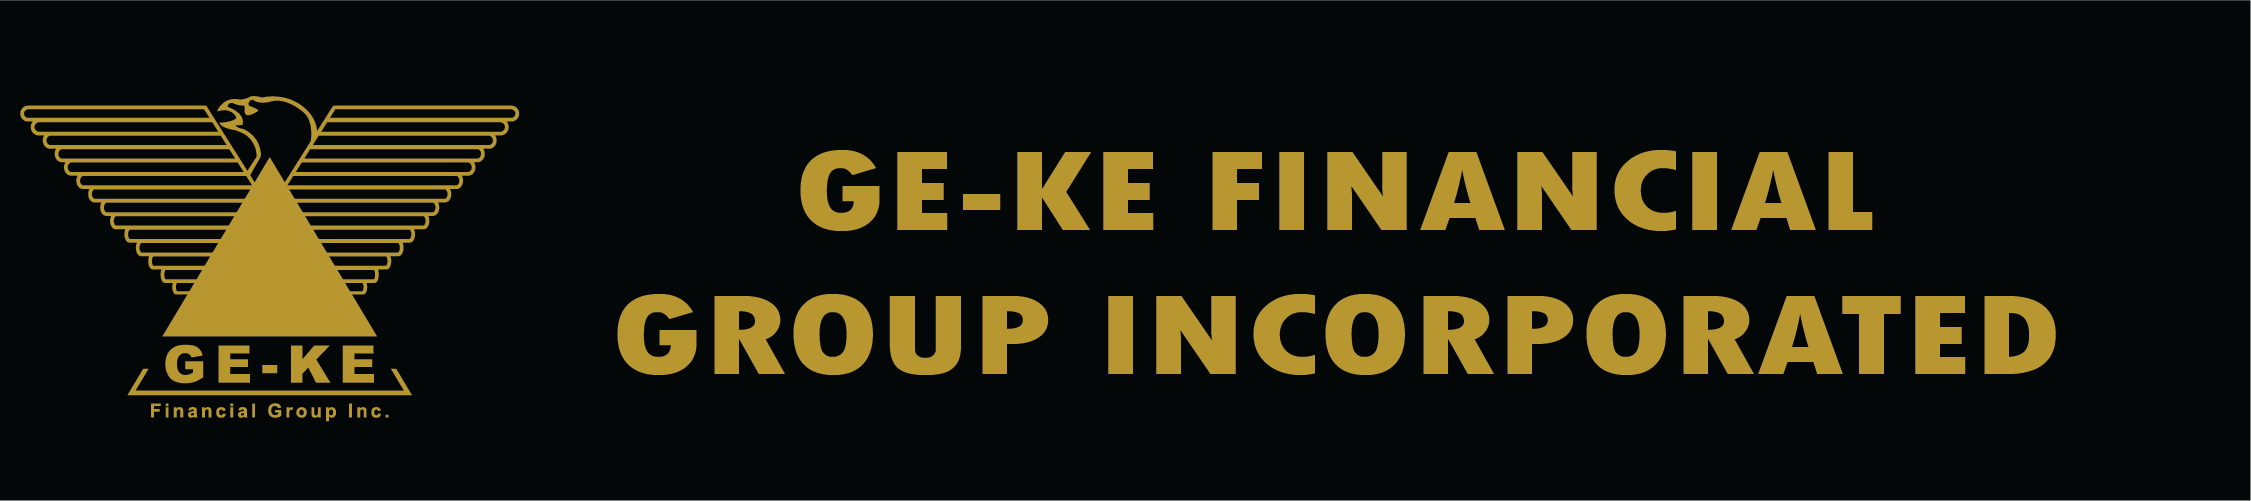 Ge-Ke Financial Group, Inc.